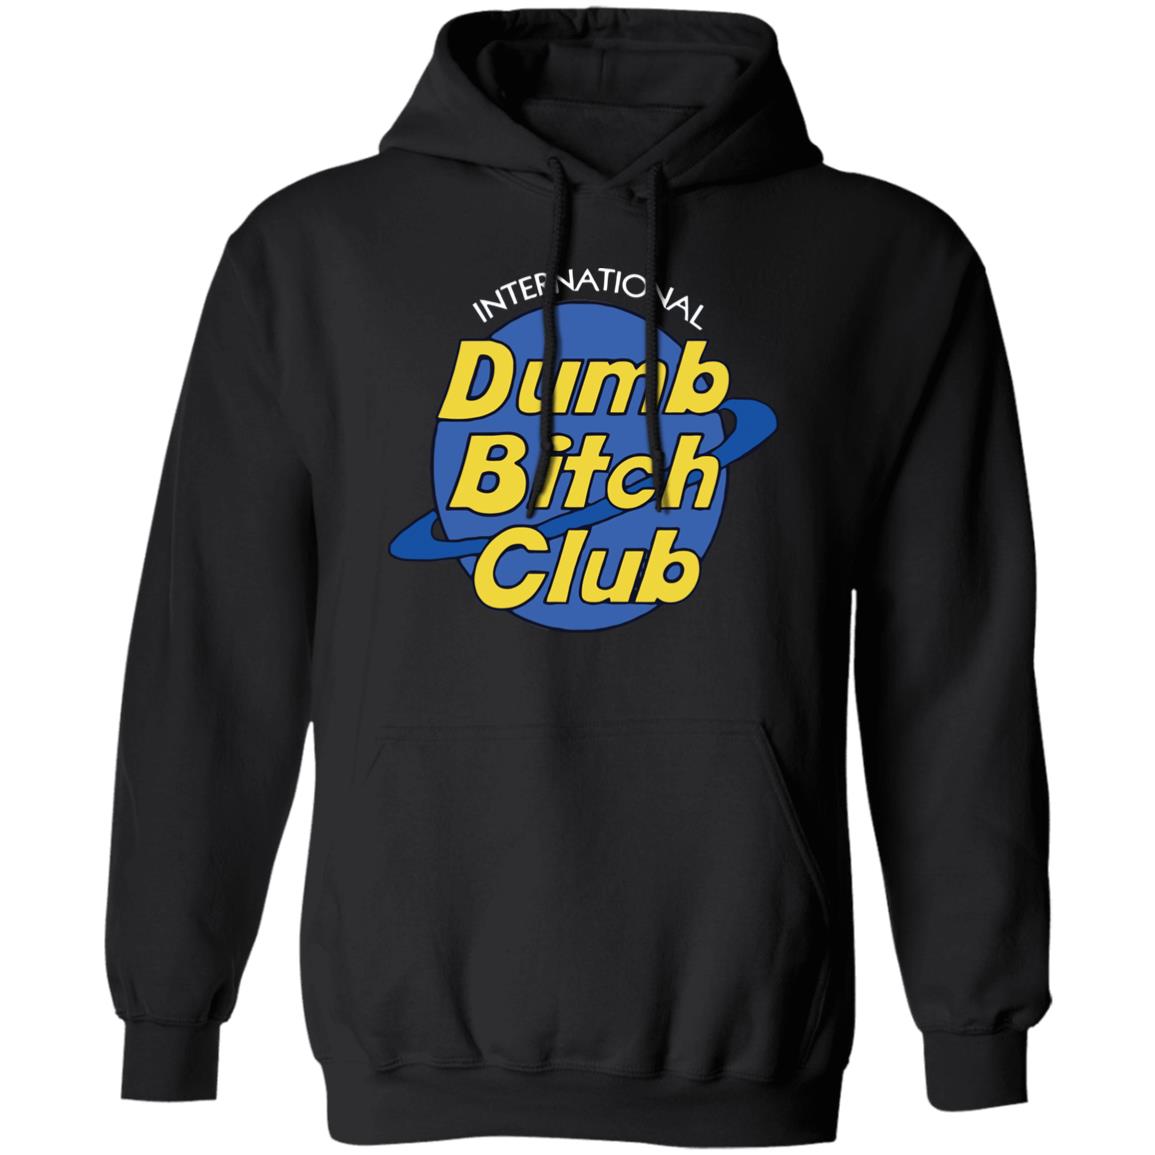 International Dumb Bitch Club Shirt Panetory – Graphic Design Apparel &Amp; Accessories Online